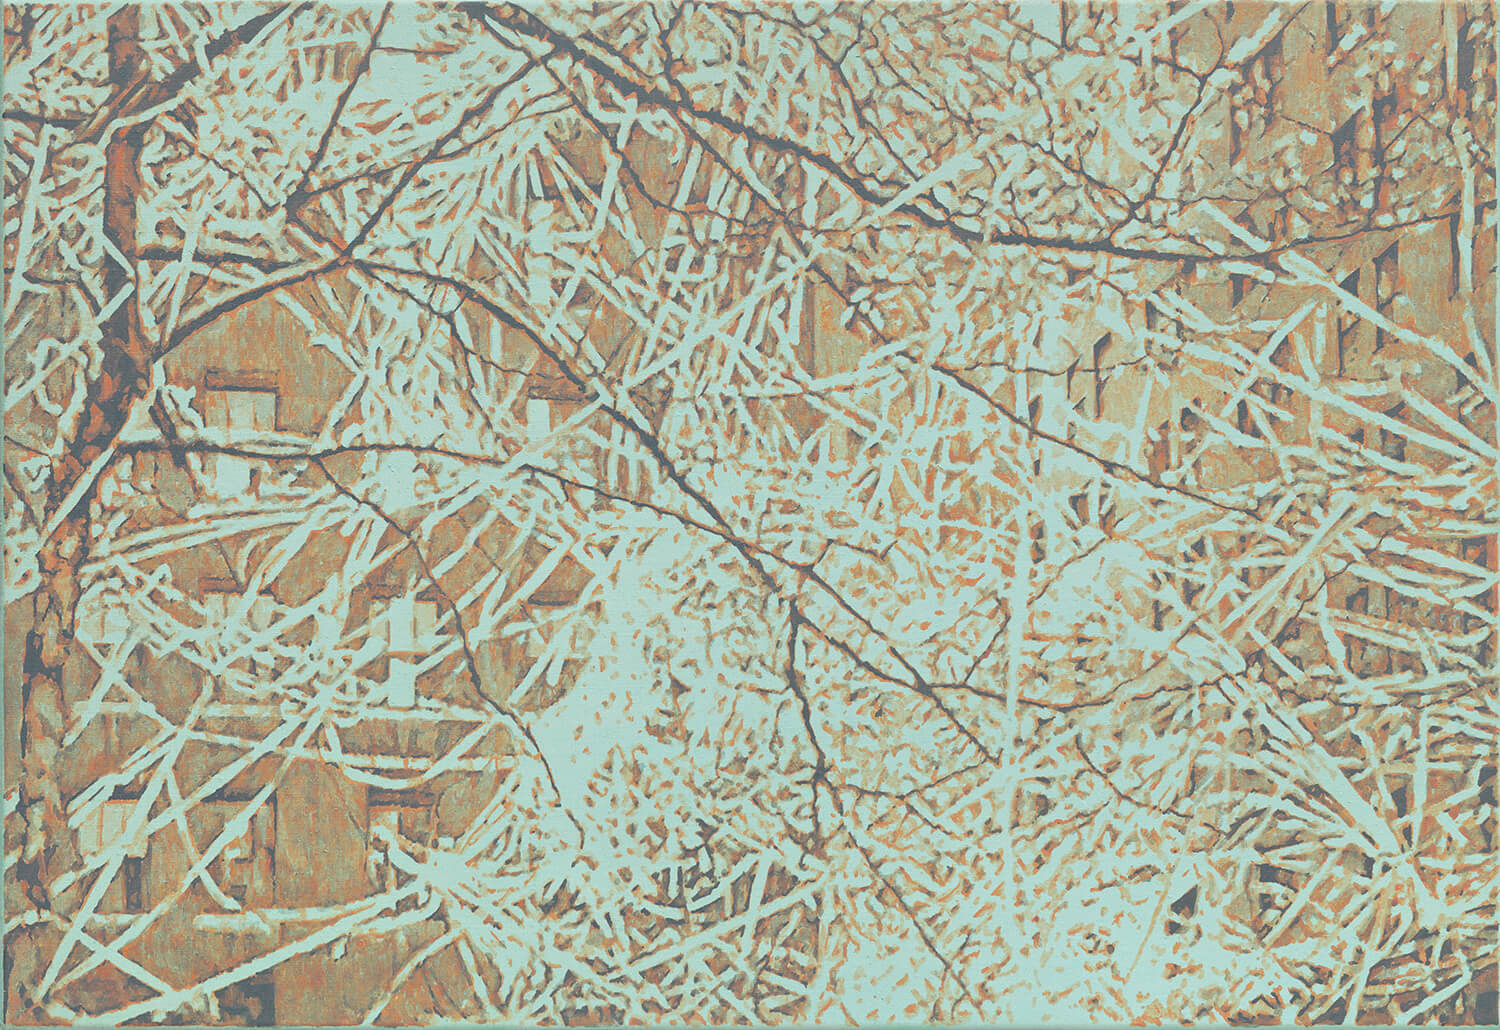 Markus Draper, New York Tree, 2013, Öl auf Leinwand, 65 x 95 cm